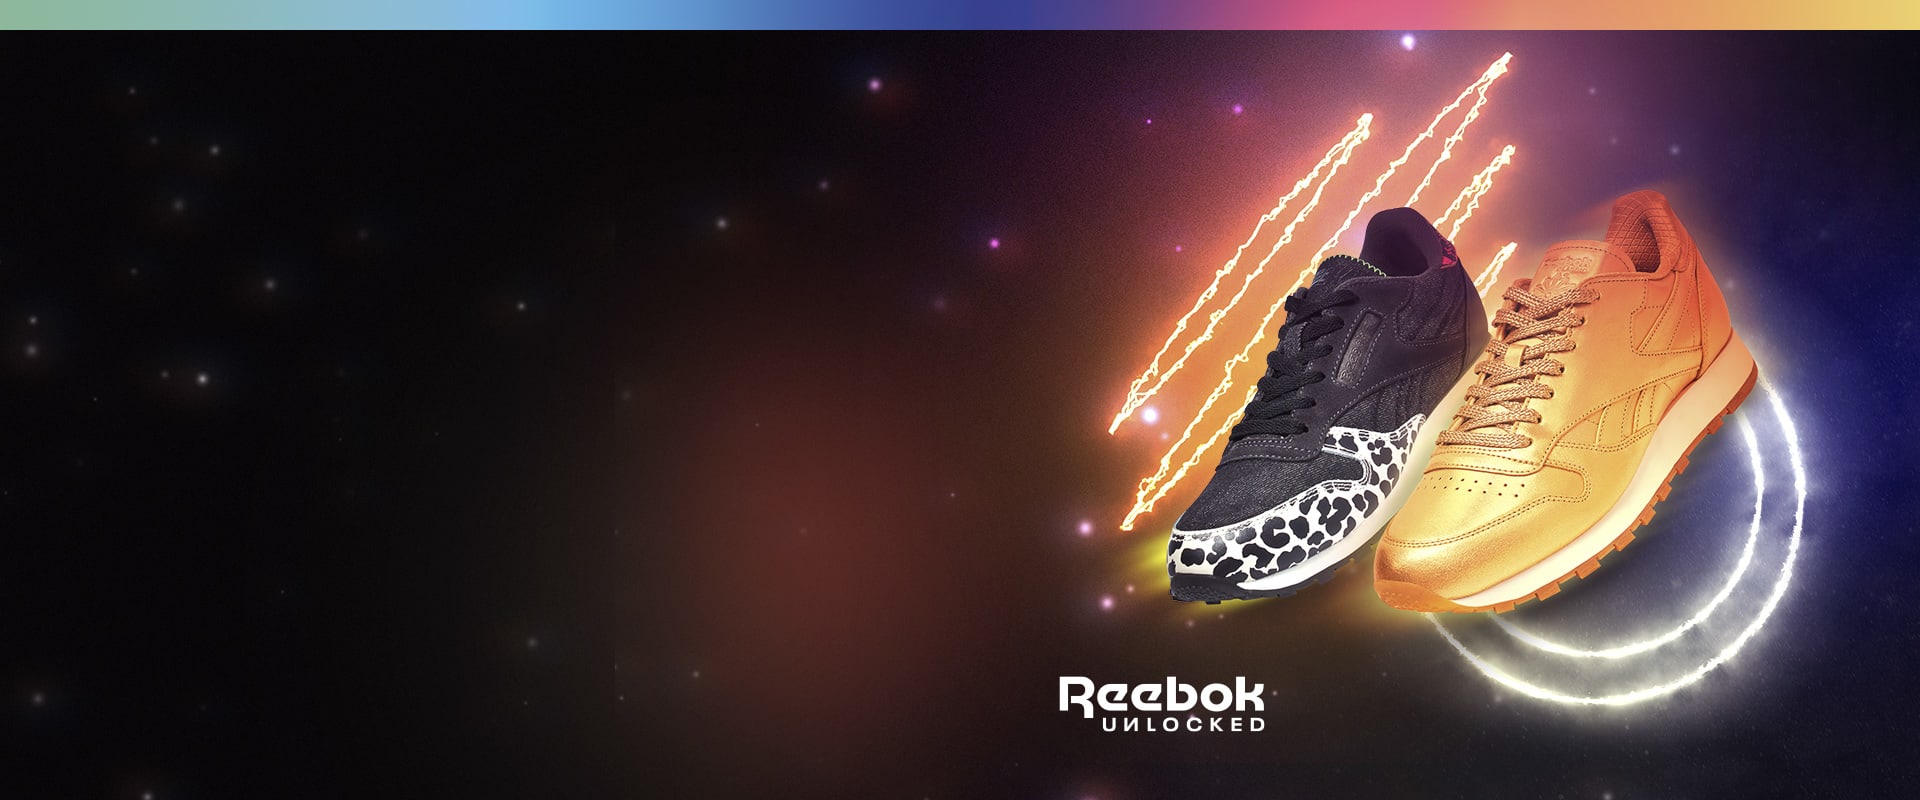 reebok company shoes